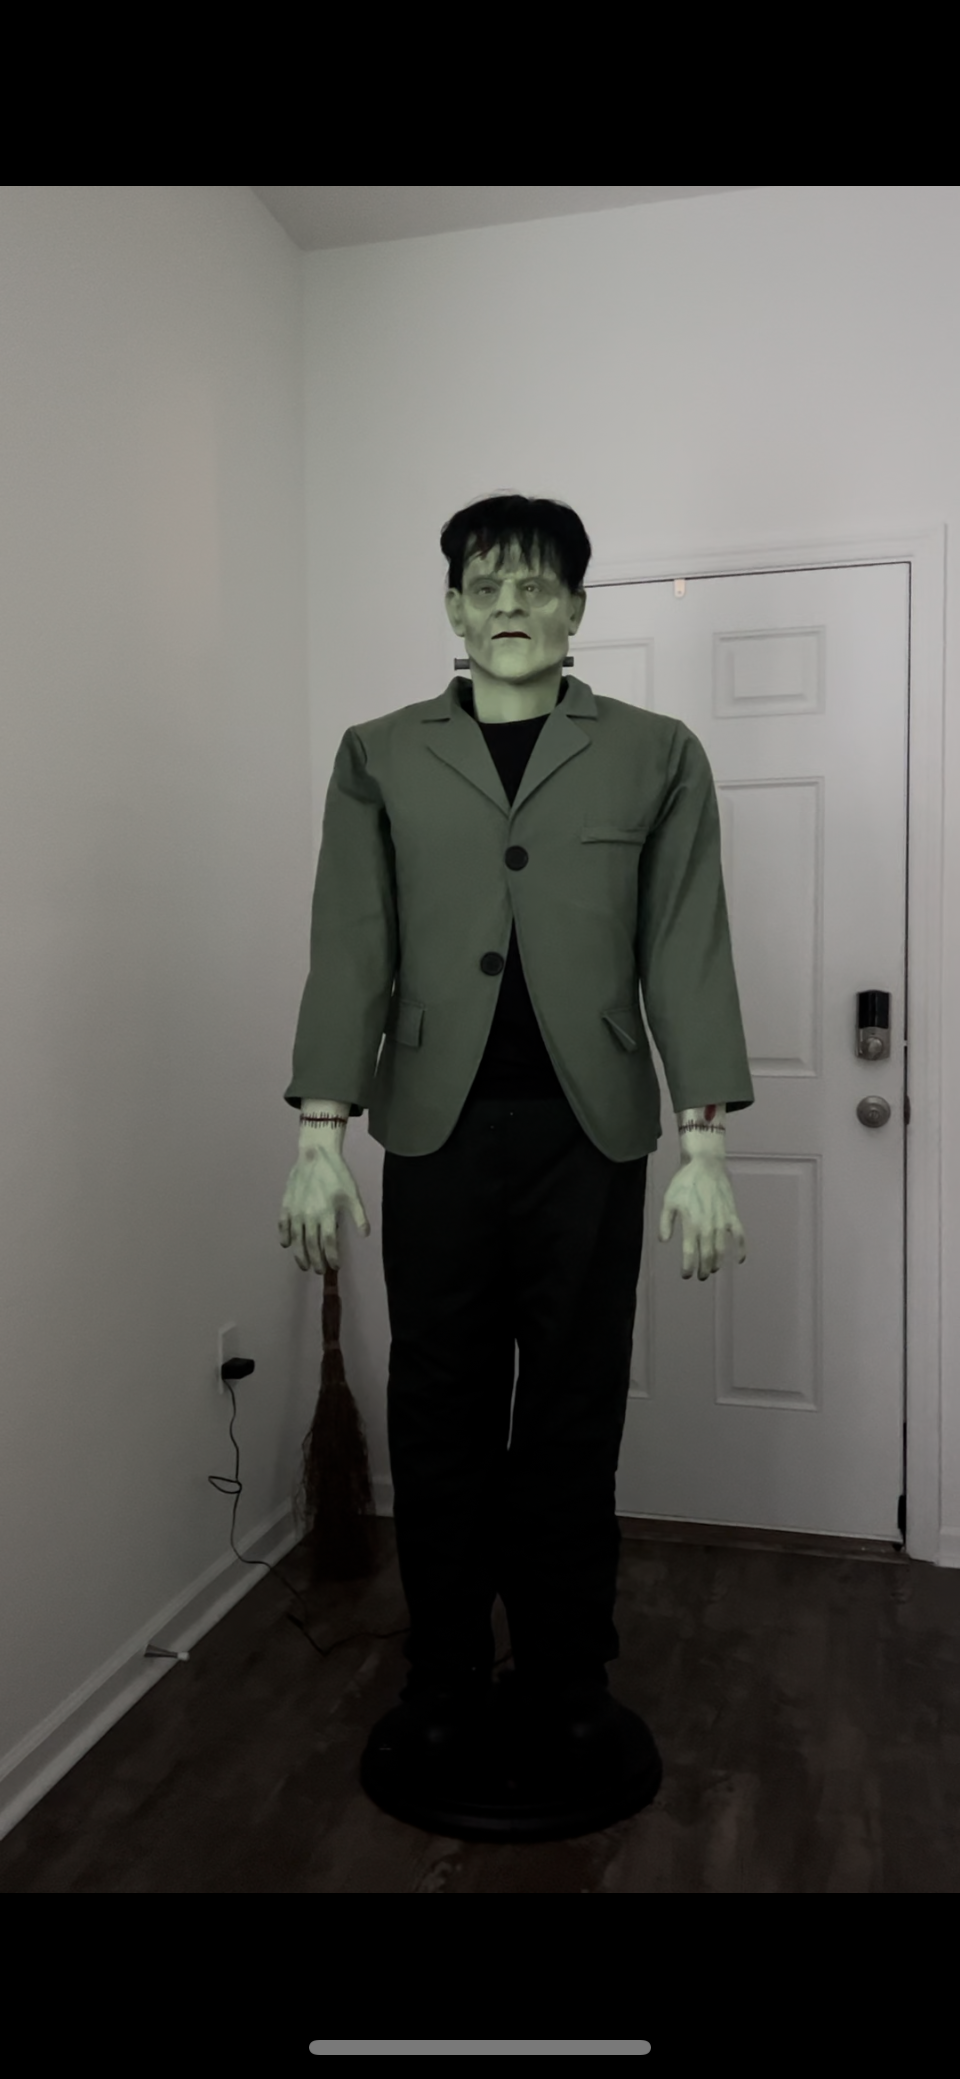 Adult Bride of Frankenstein Costume - Universal Classic Monsters by Spirit Halloween